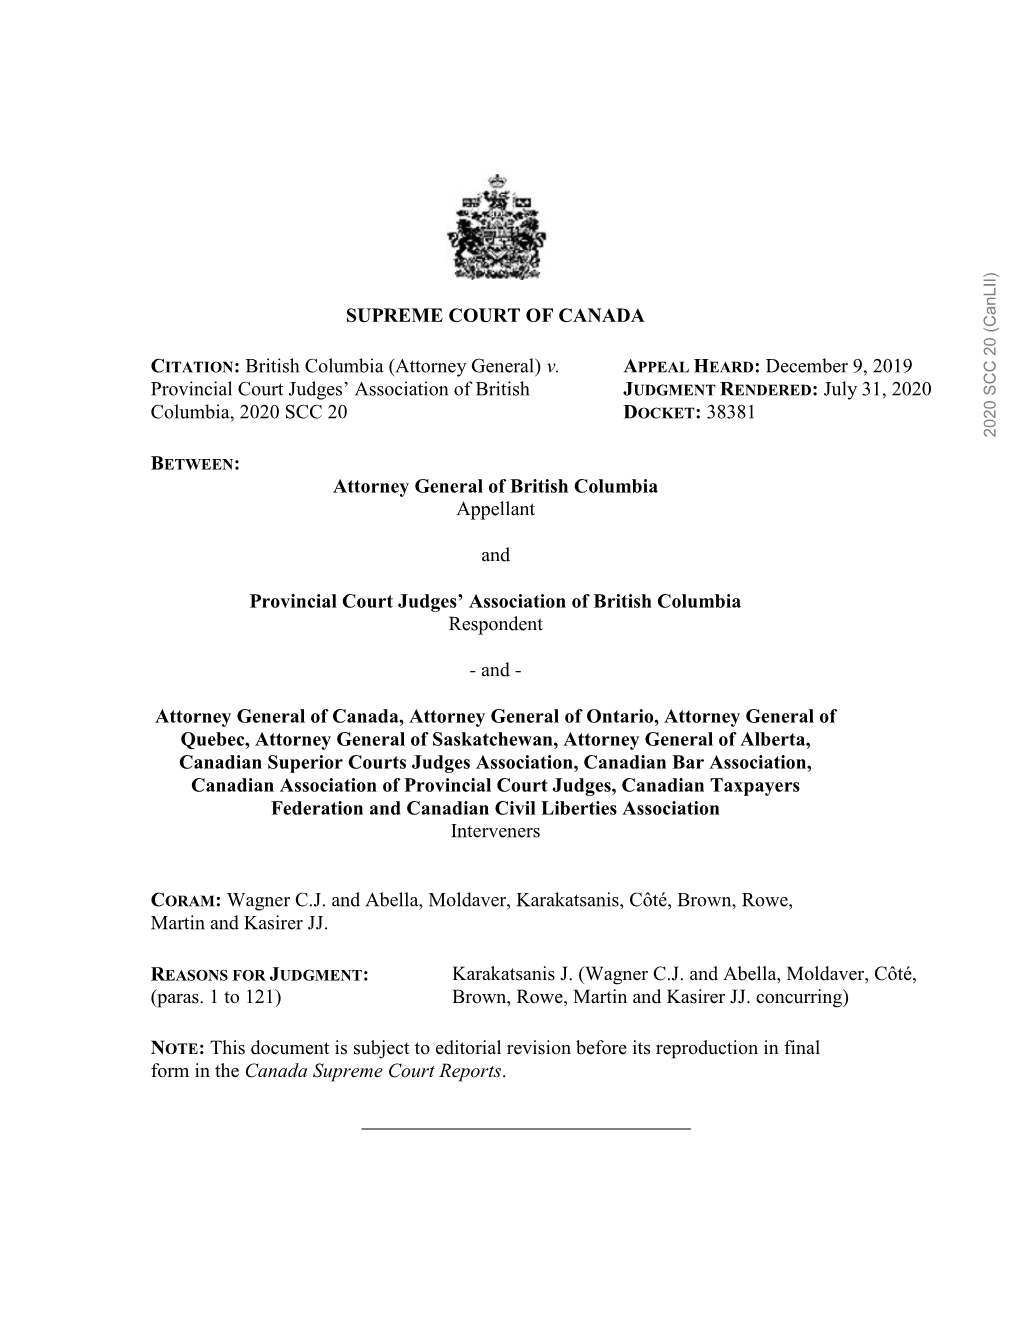 British Columbia (Attorney General) V. Provincial Court Judges’ Association of British Columbia